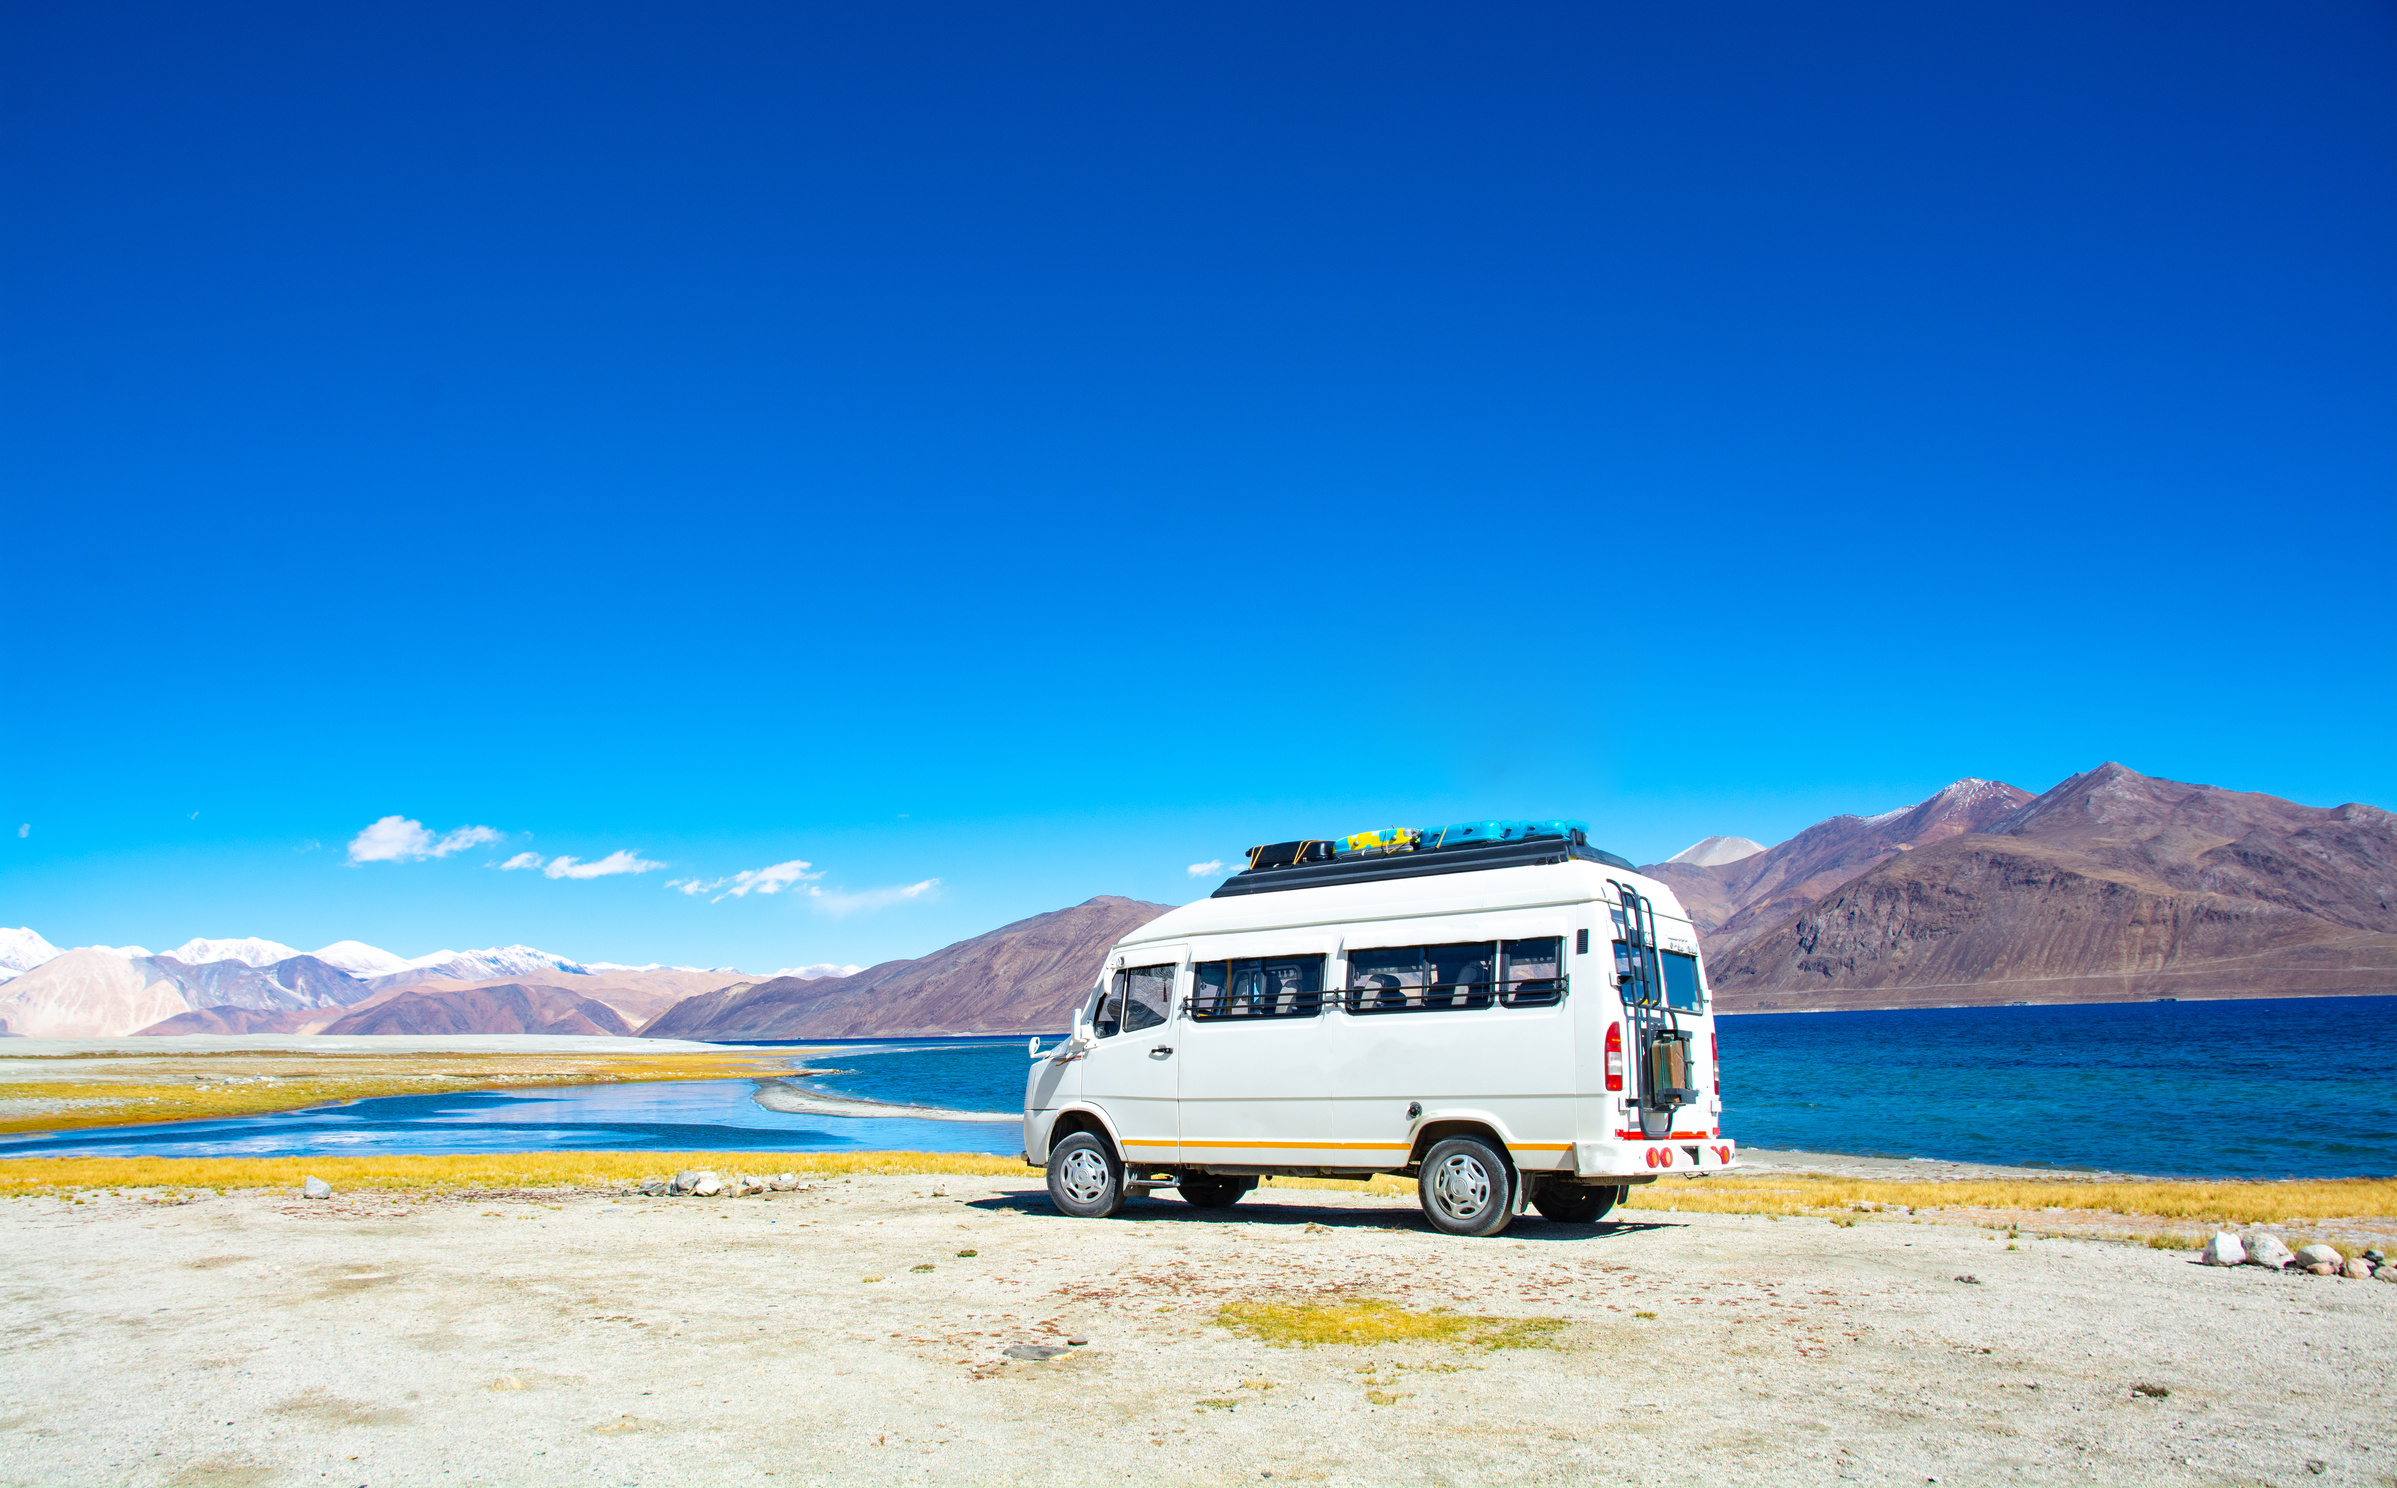 Camper Van by the Sea at Ladakh, India